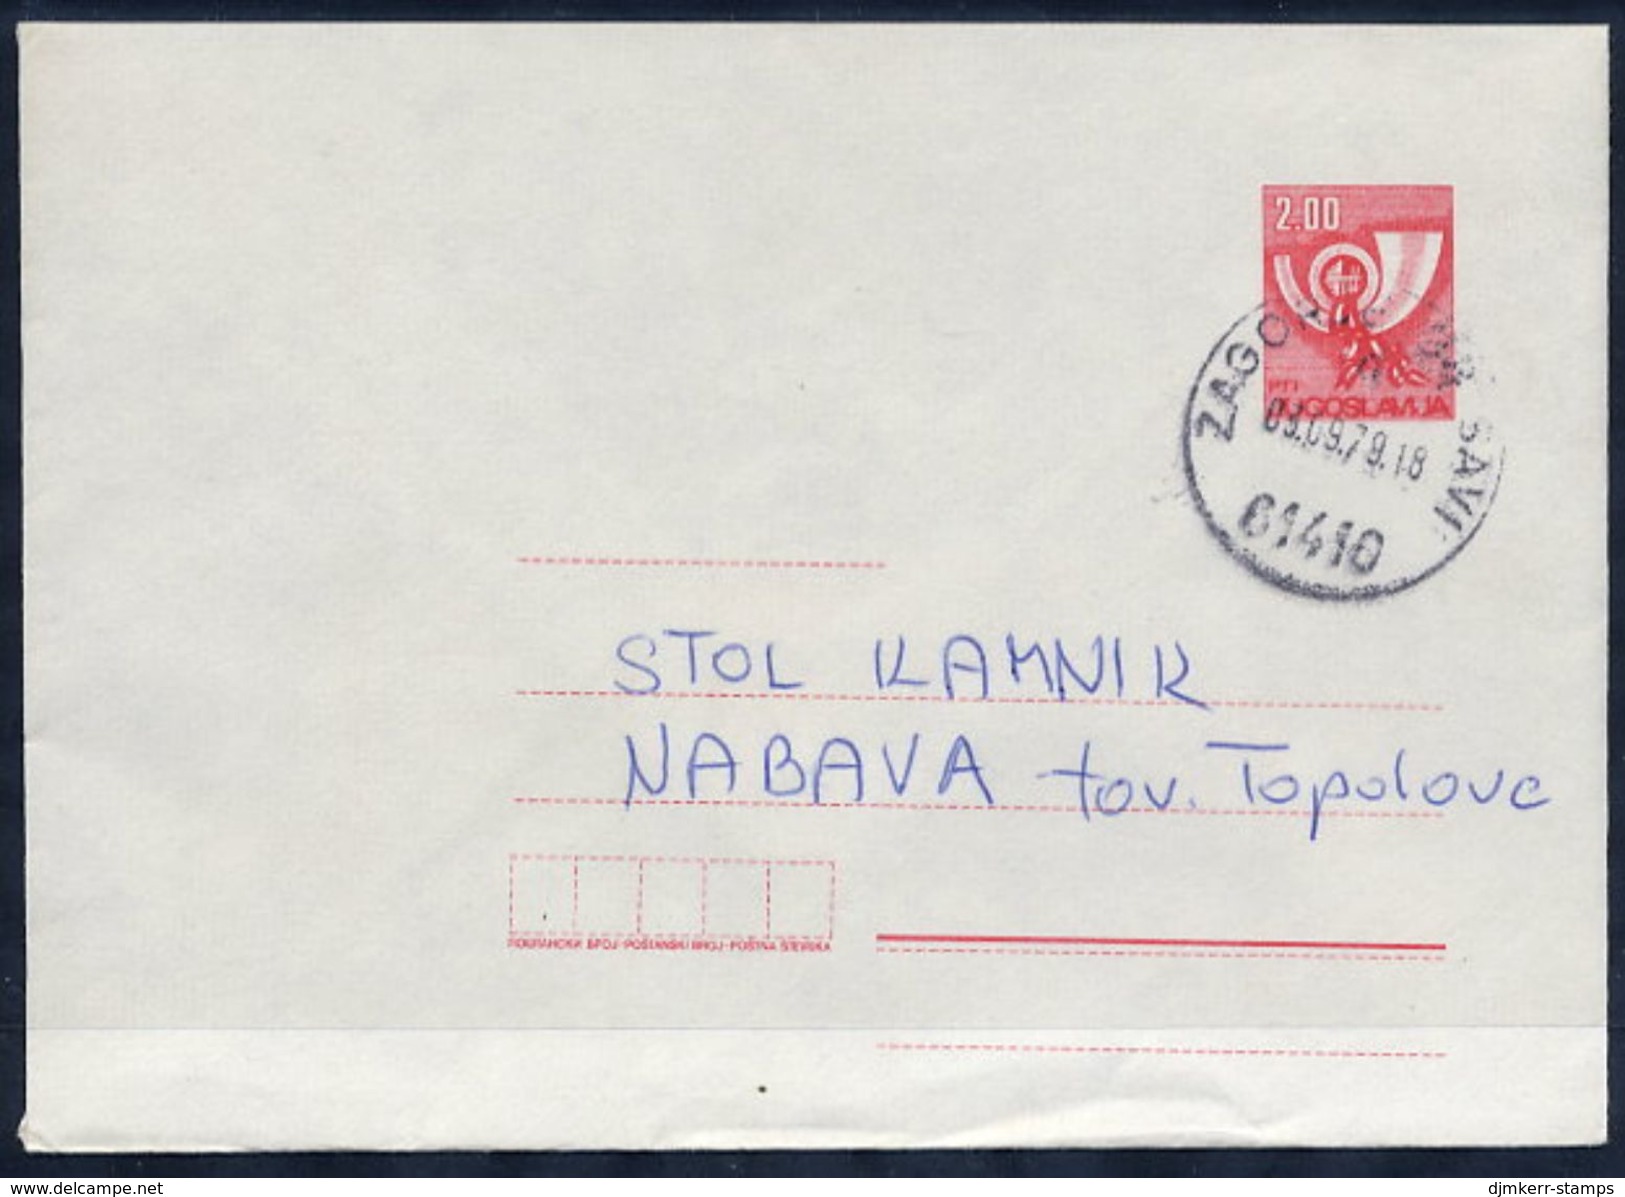 YUGOSLAVIA 1978 Posthorn 2 D.stationery Envelope Used Without Additional Franking.  Michel U71 - Postal Stationery